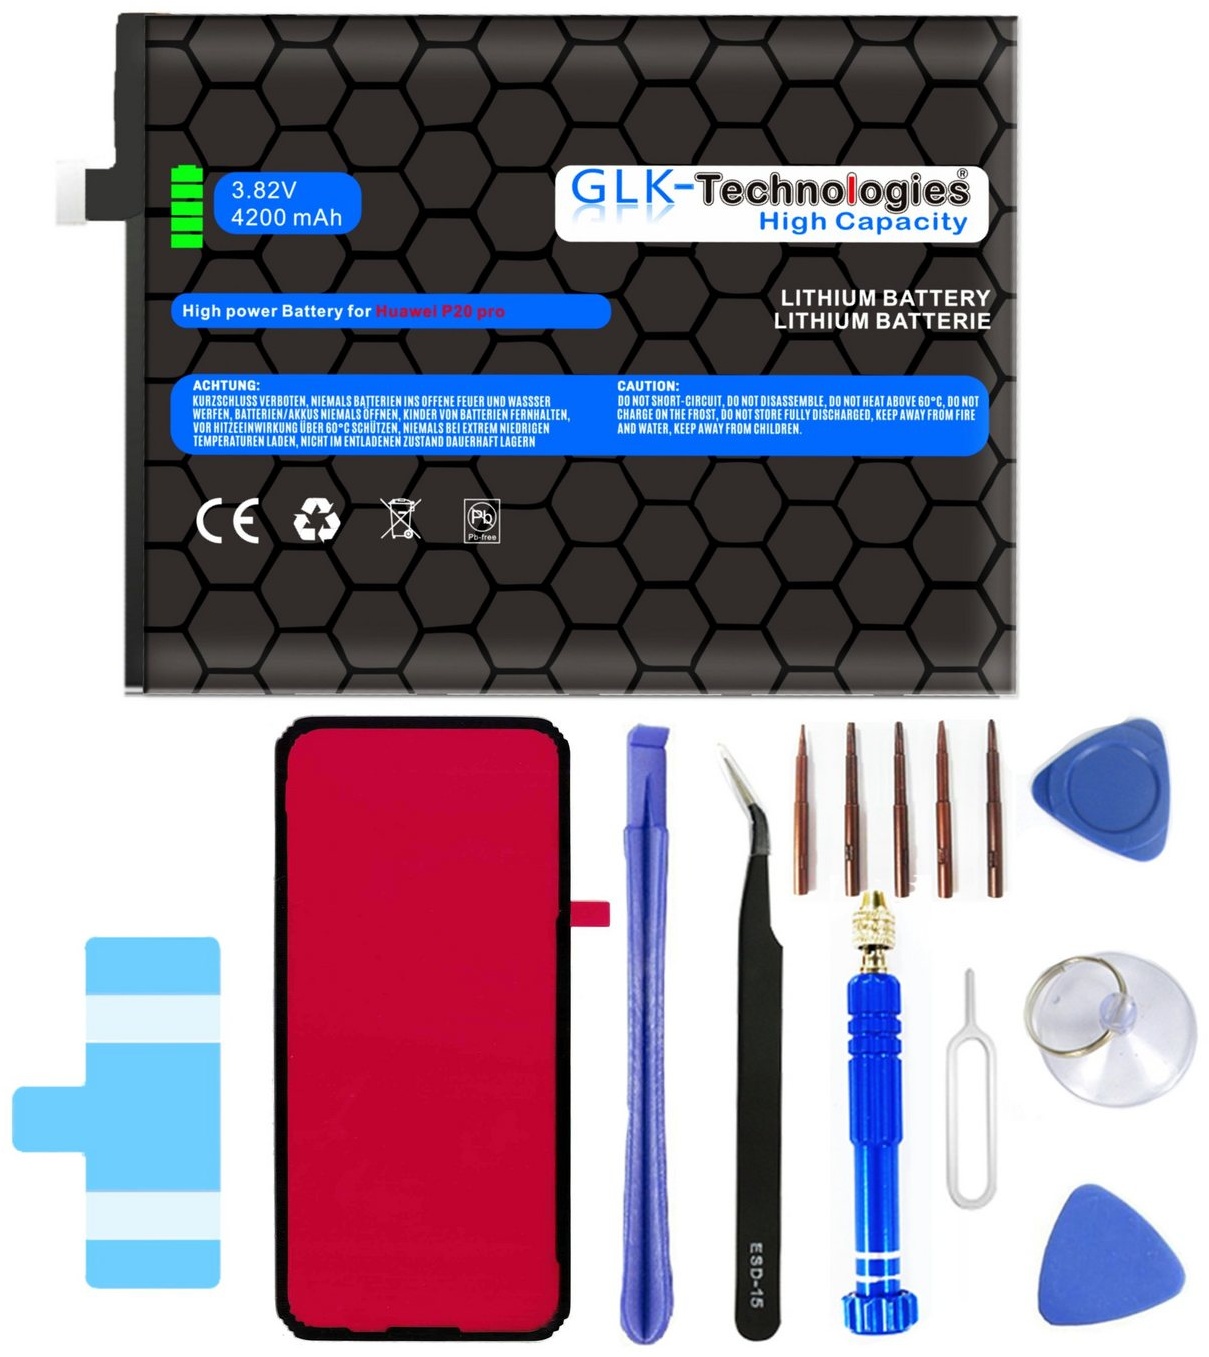 GLK-Technologies High Power Ersatz Akku für Huawei Mate 10 PRO Mate 10 P20 PRO inkl. Werkzeug Set Kit Smartphone-Akku 4200 mAh (3,8 V)